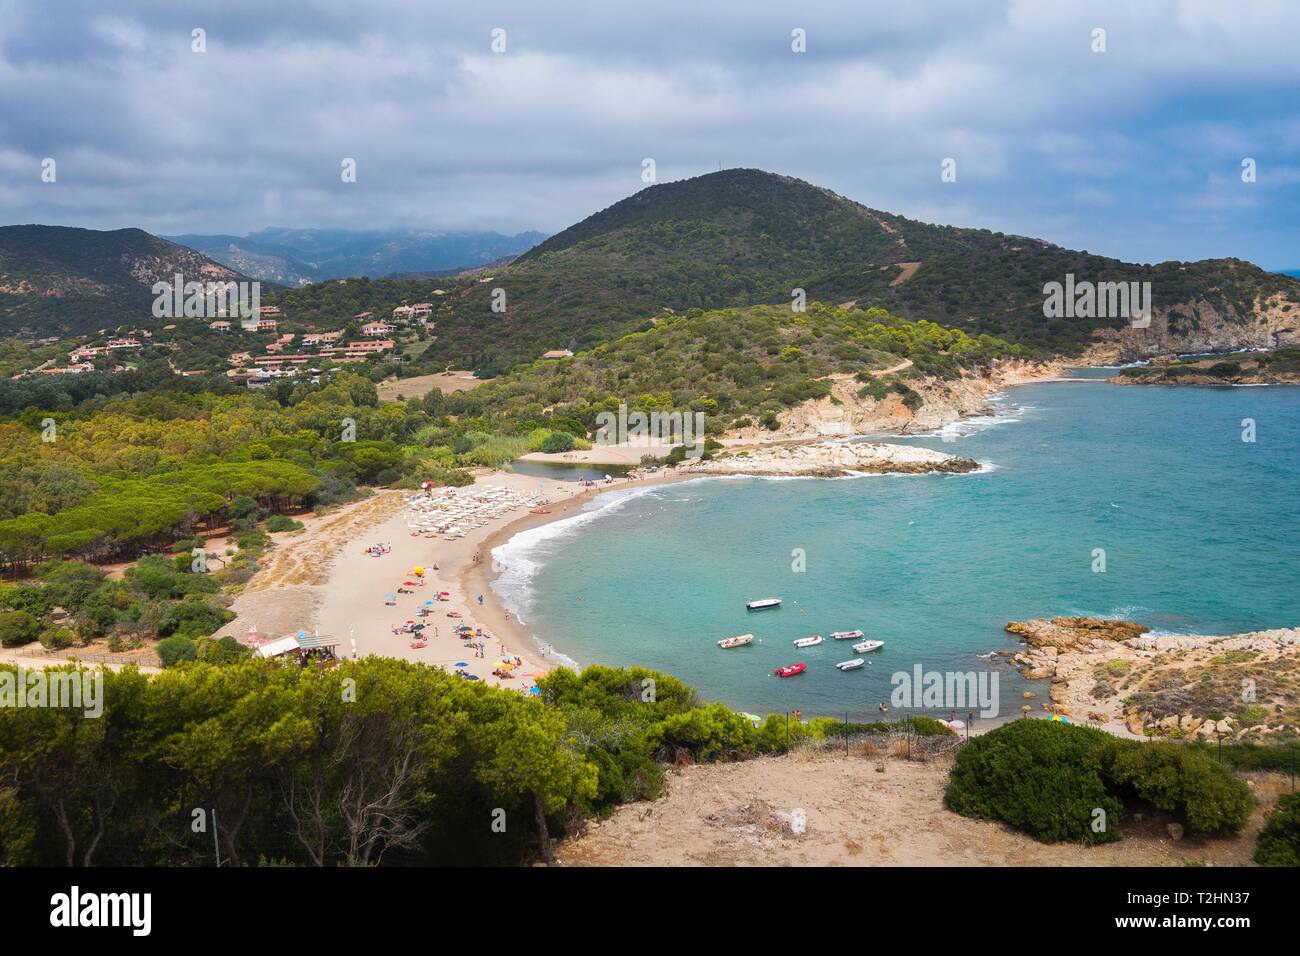 Spiaggia di Su Giudeu beach, near the village of Chia, Sardinia, Italy, Europe Stock Photo